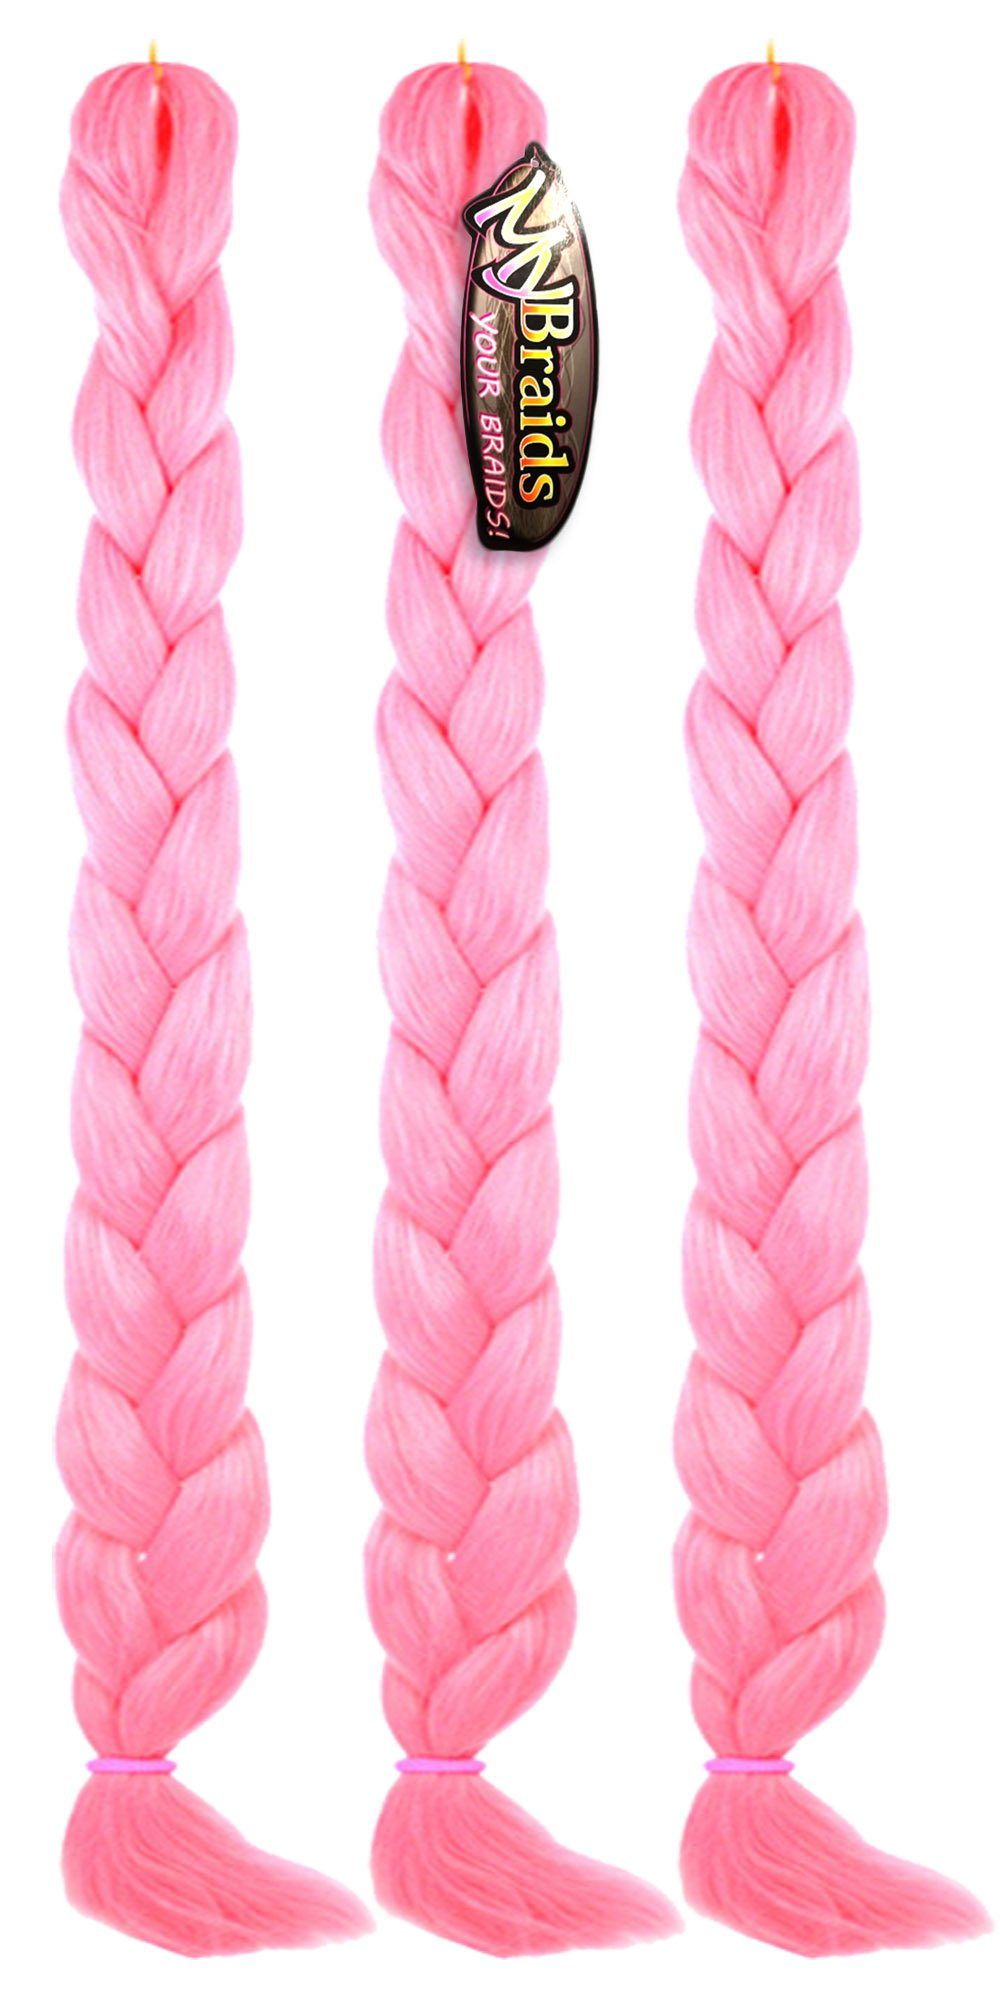 MyBraids Braids 2m 15-AY 1-farbig Rosa YOUR BRAIDS! Pack im Premium mit Länge Flechthaar Kunsthaar-Extension 3er Zöpfe